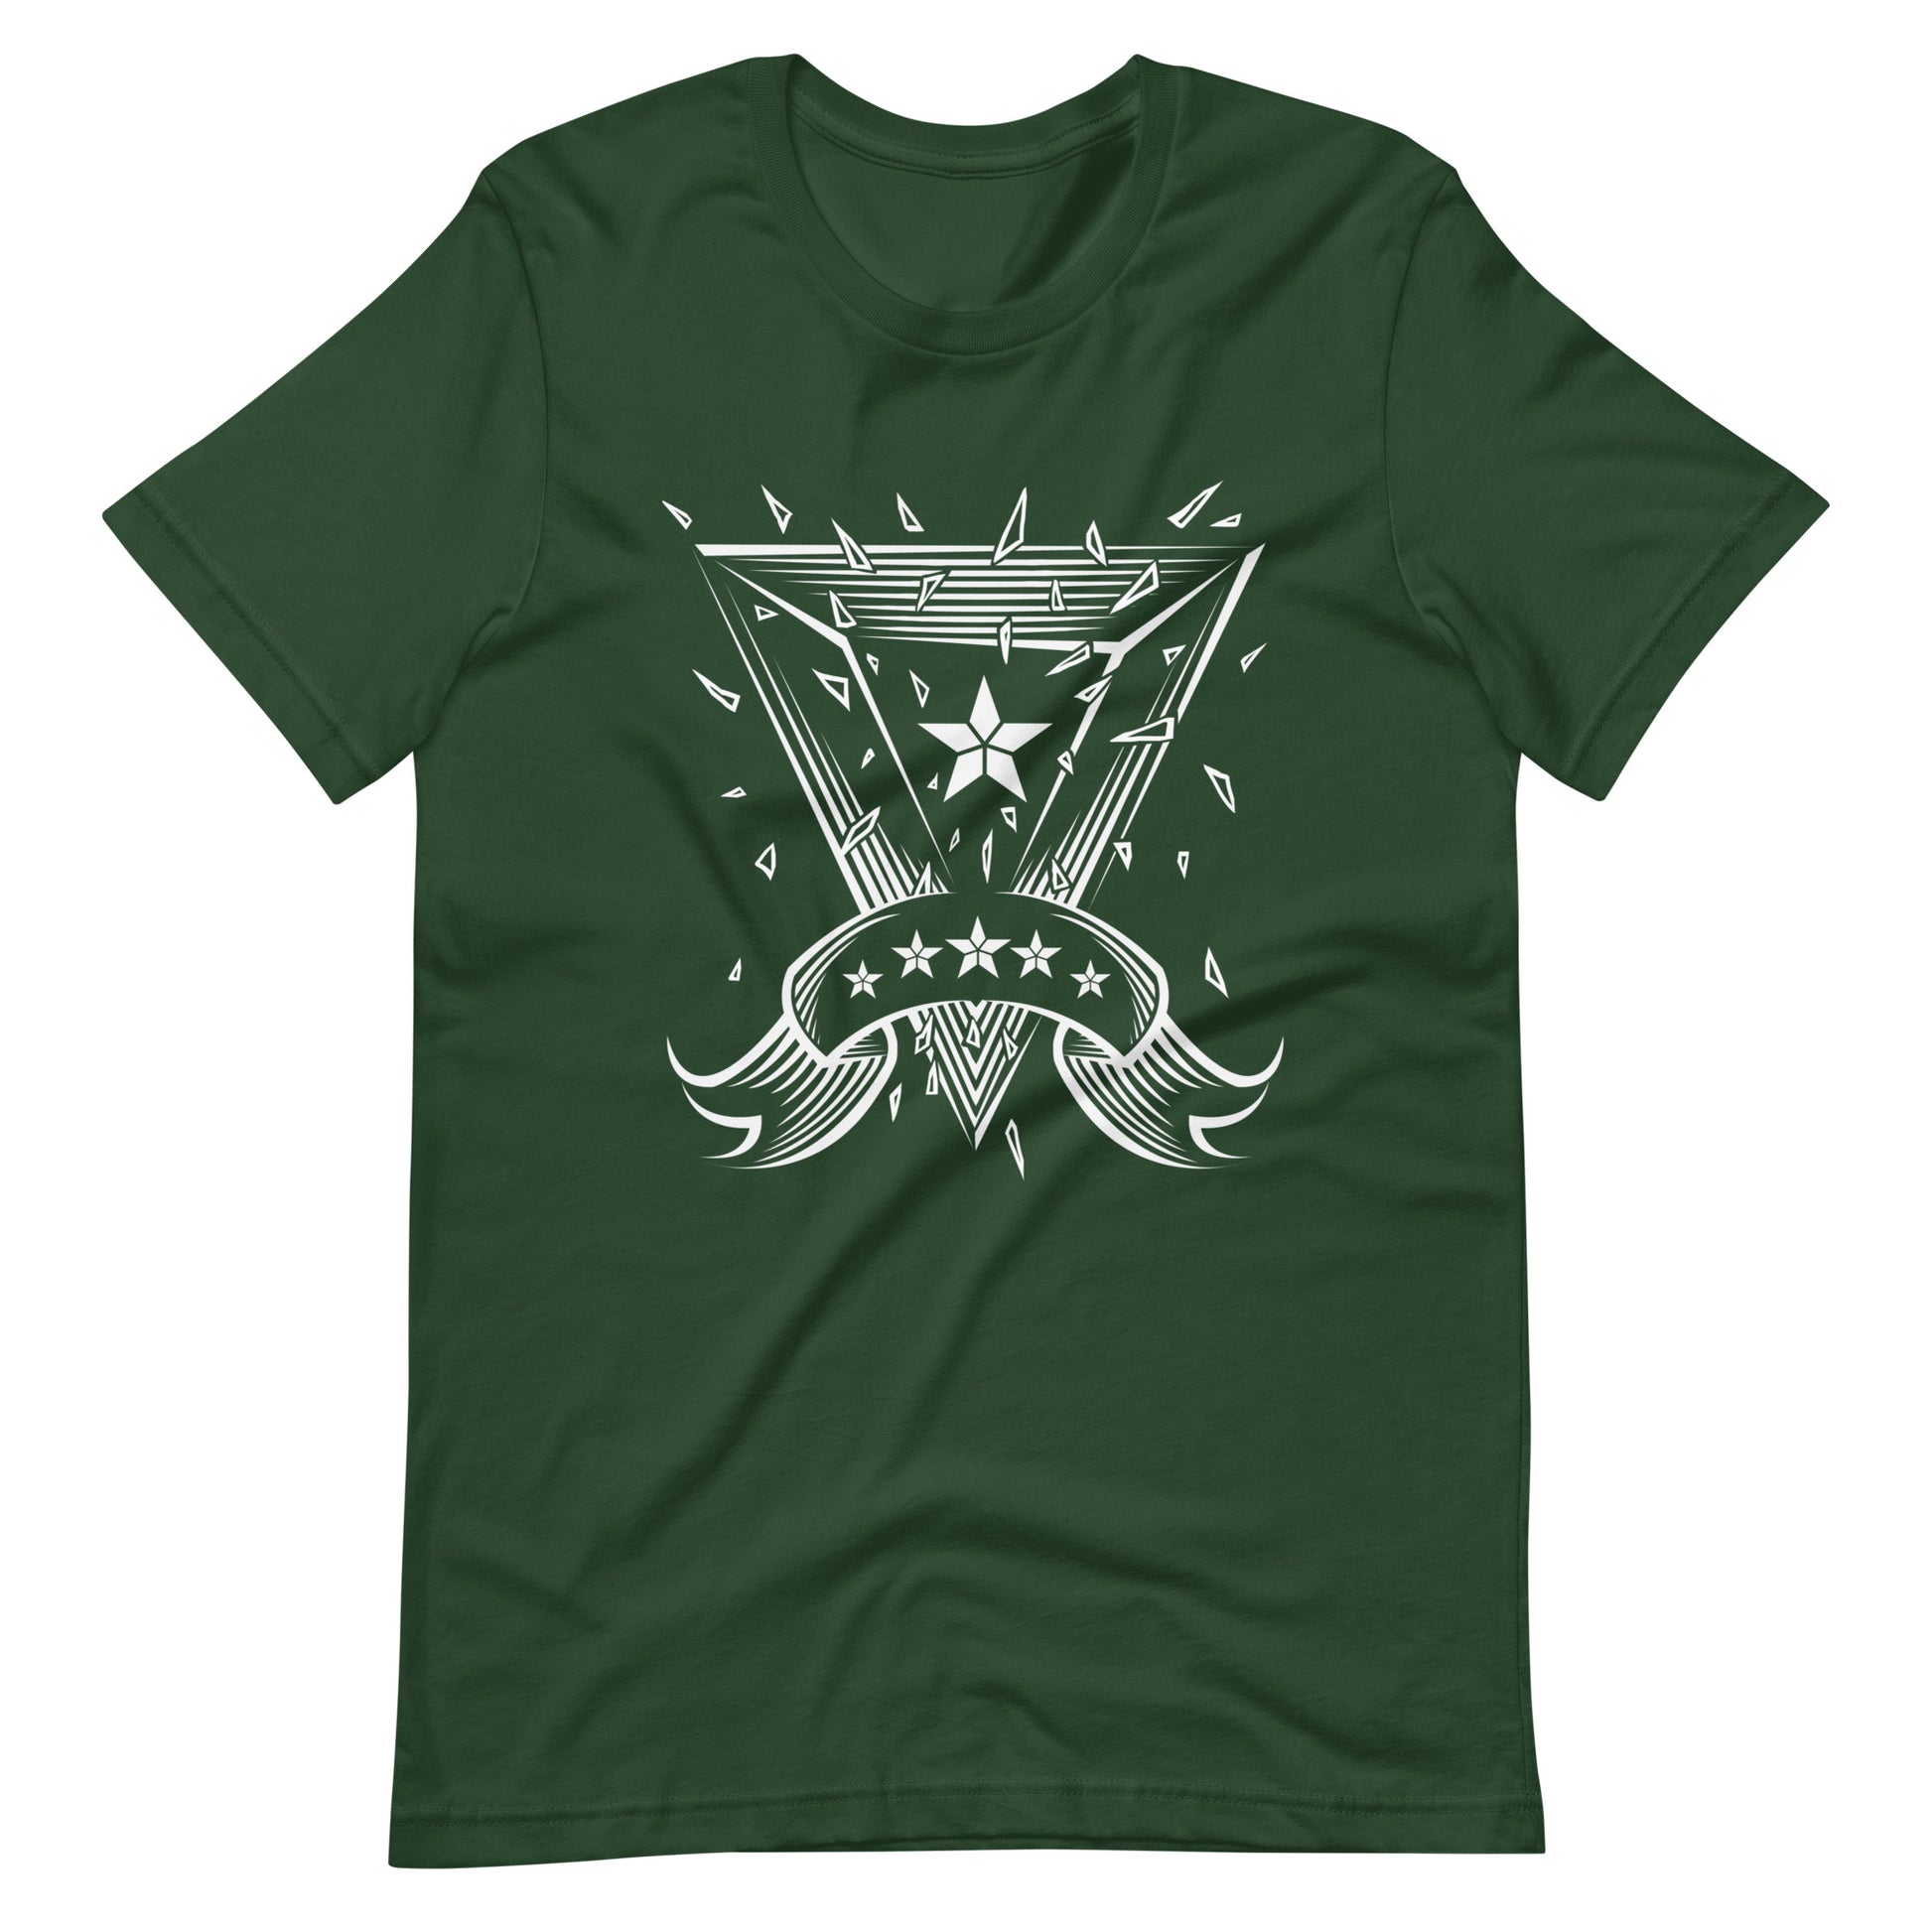 Starlight - Men's t-shirt - Forest Front